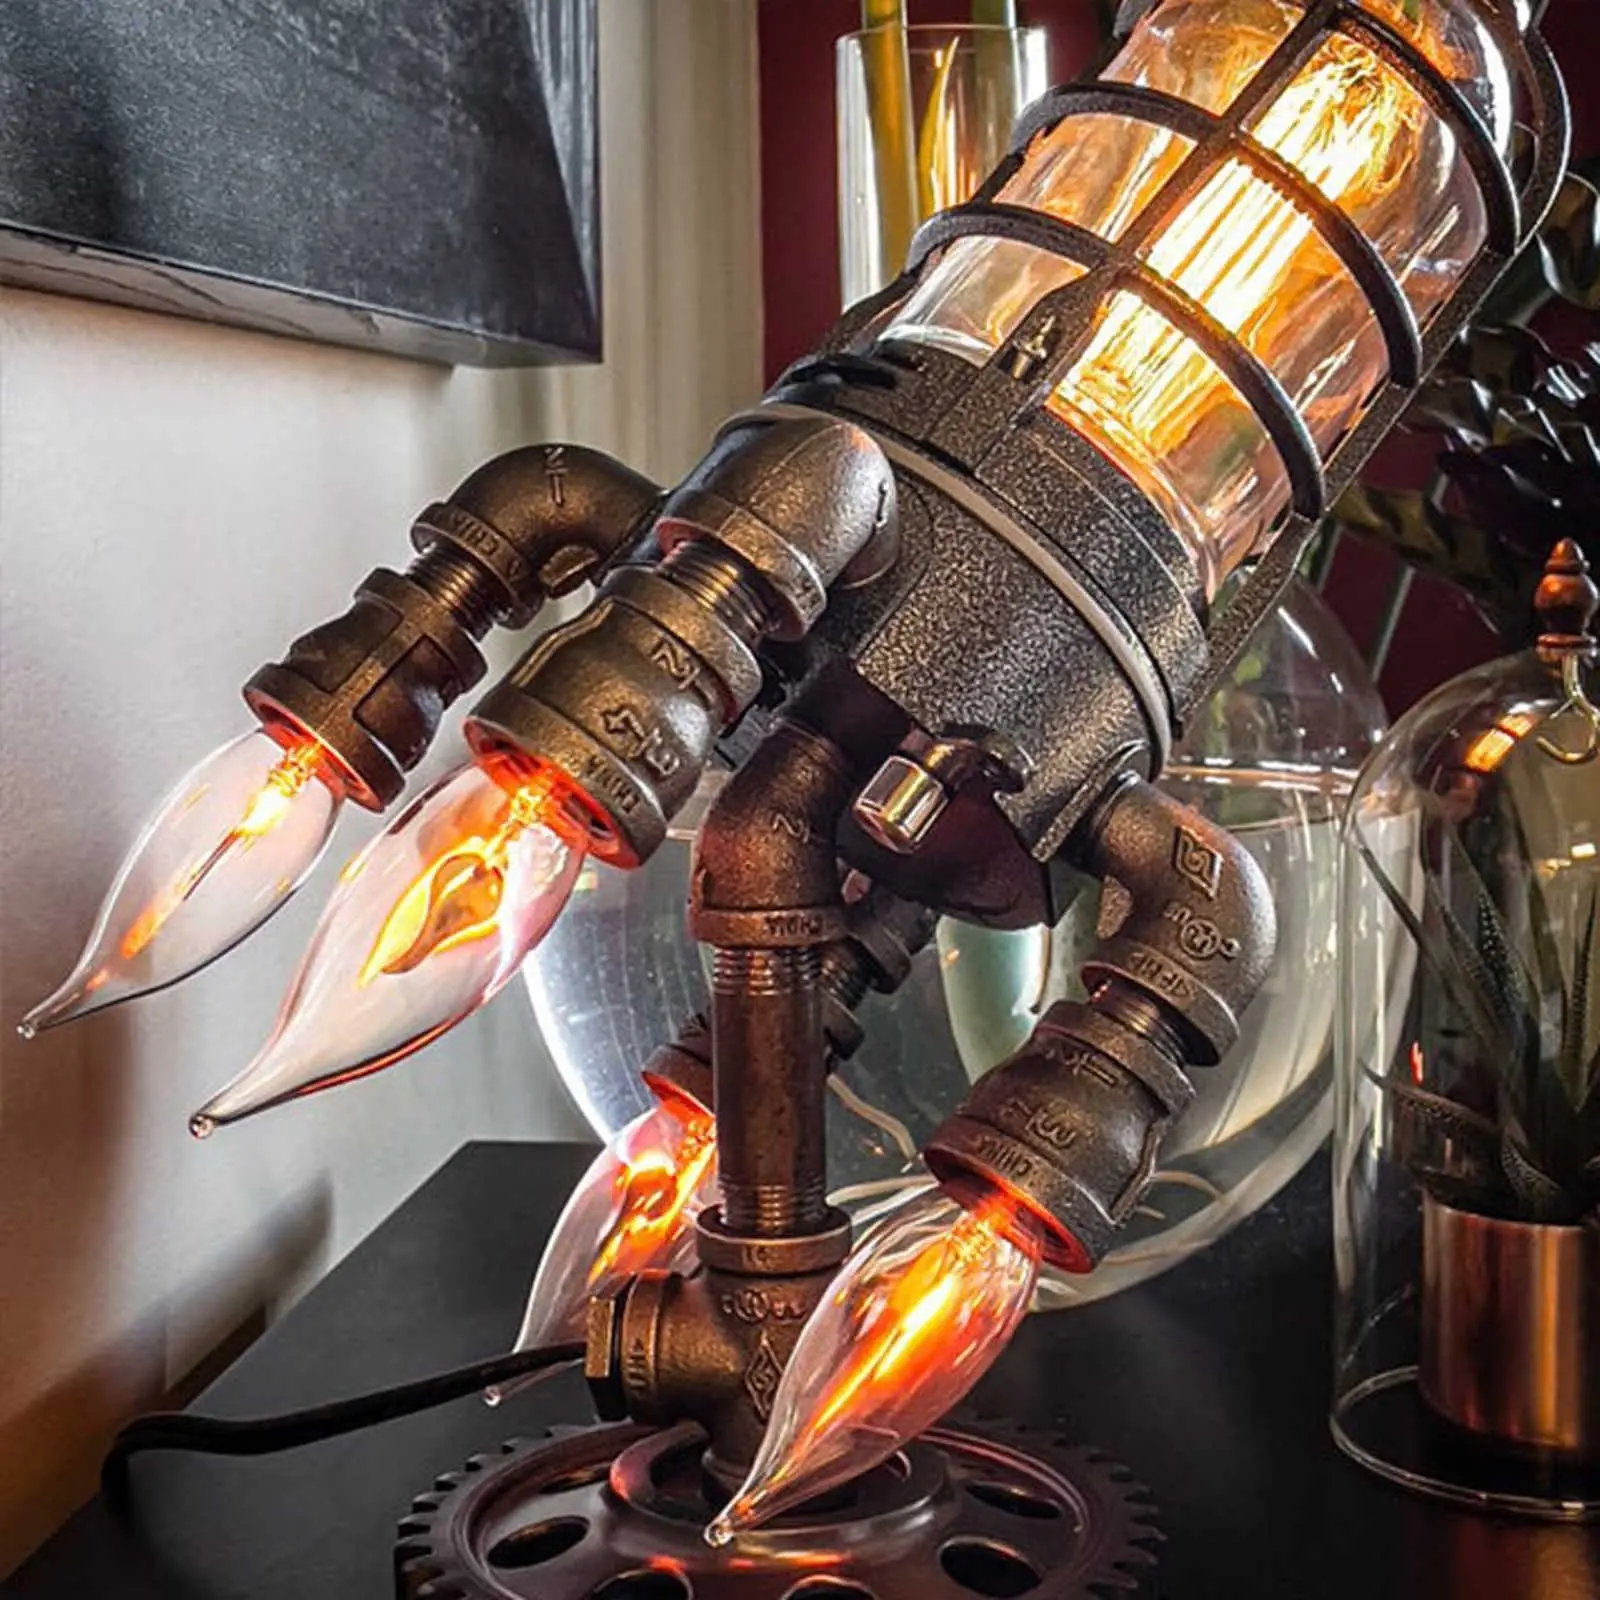 

Creative Rocket Ship Lamp Steampunk Industrial Desk Night lamp decoractive Bedside Table Light for Bedroom Decor Kids Gifts